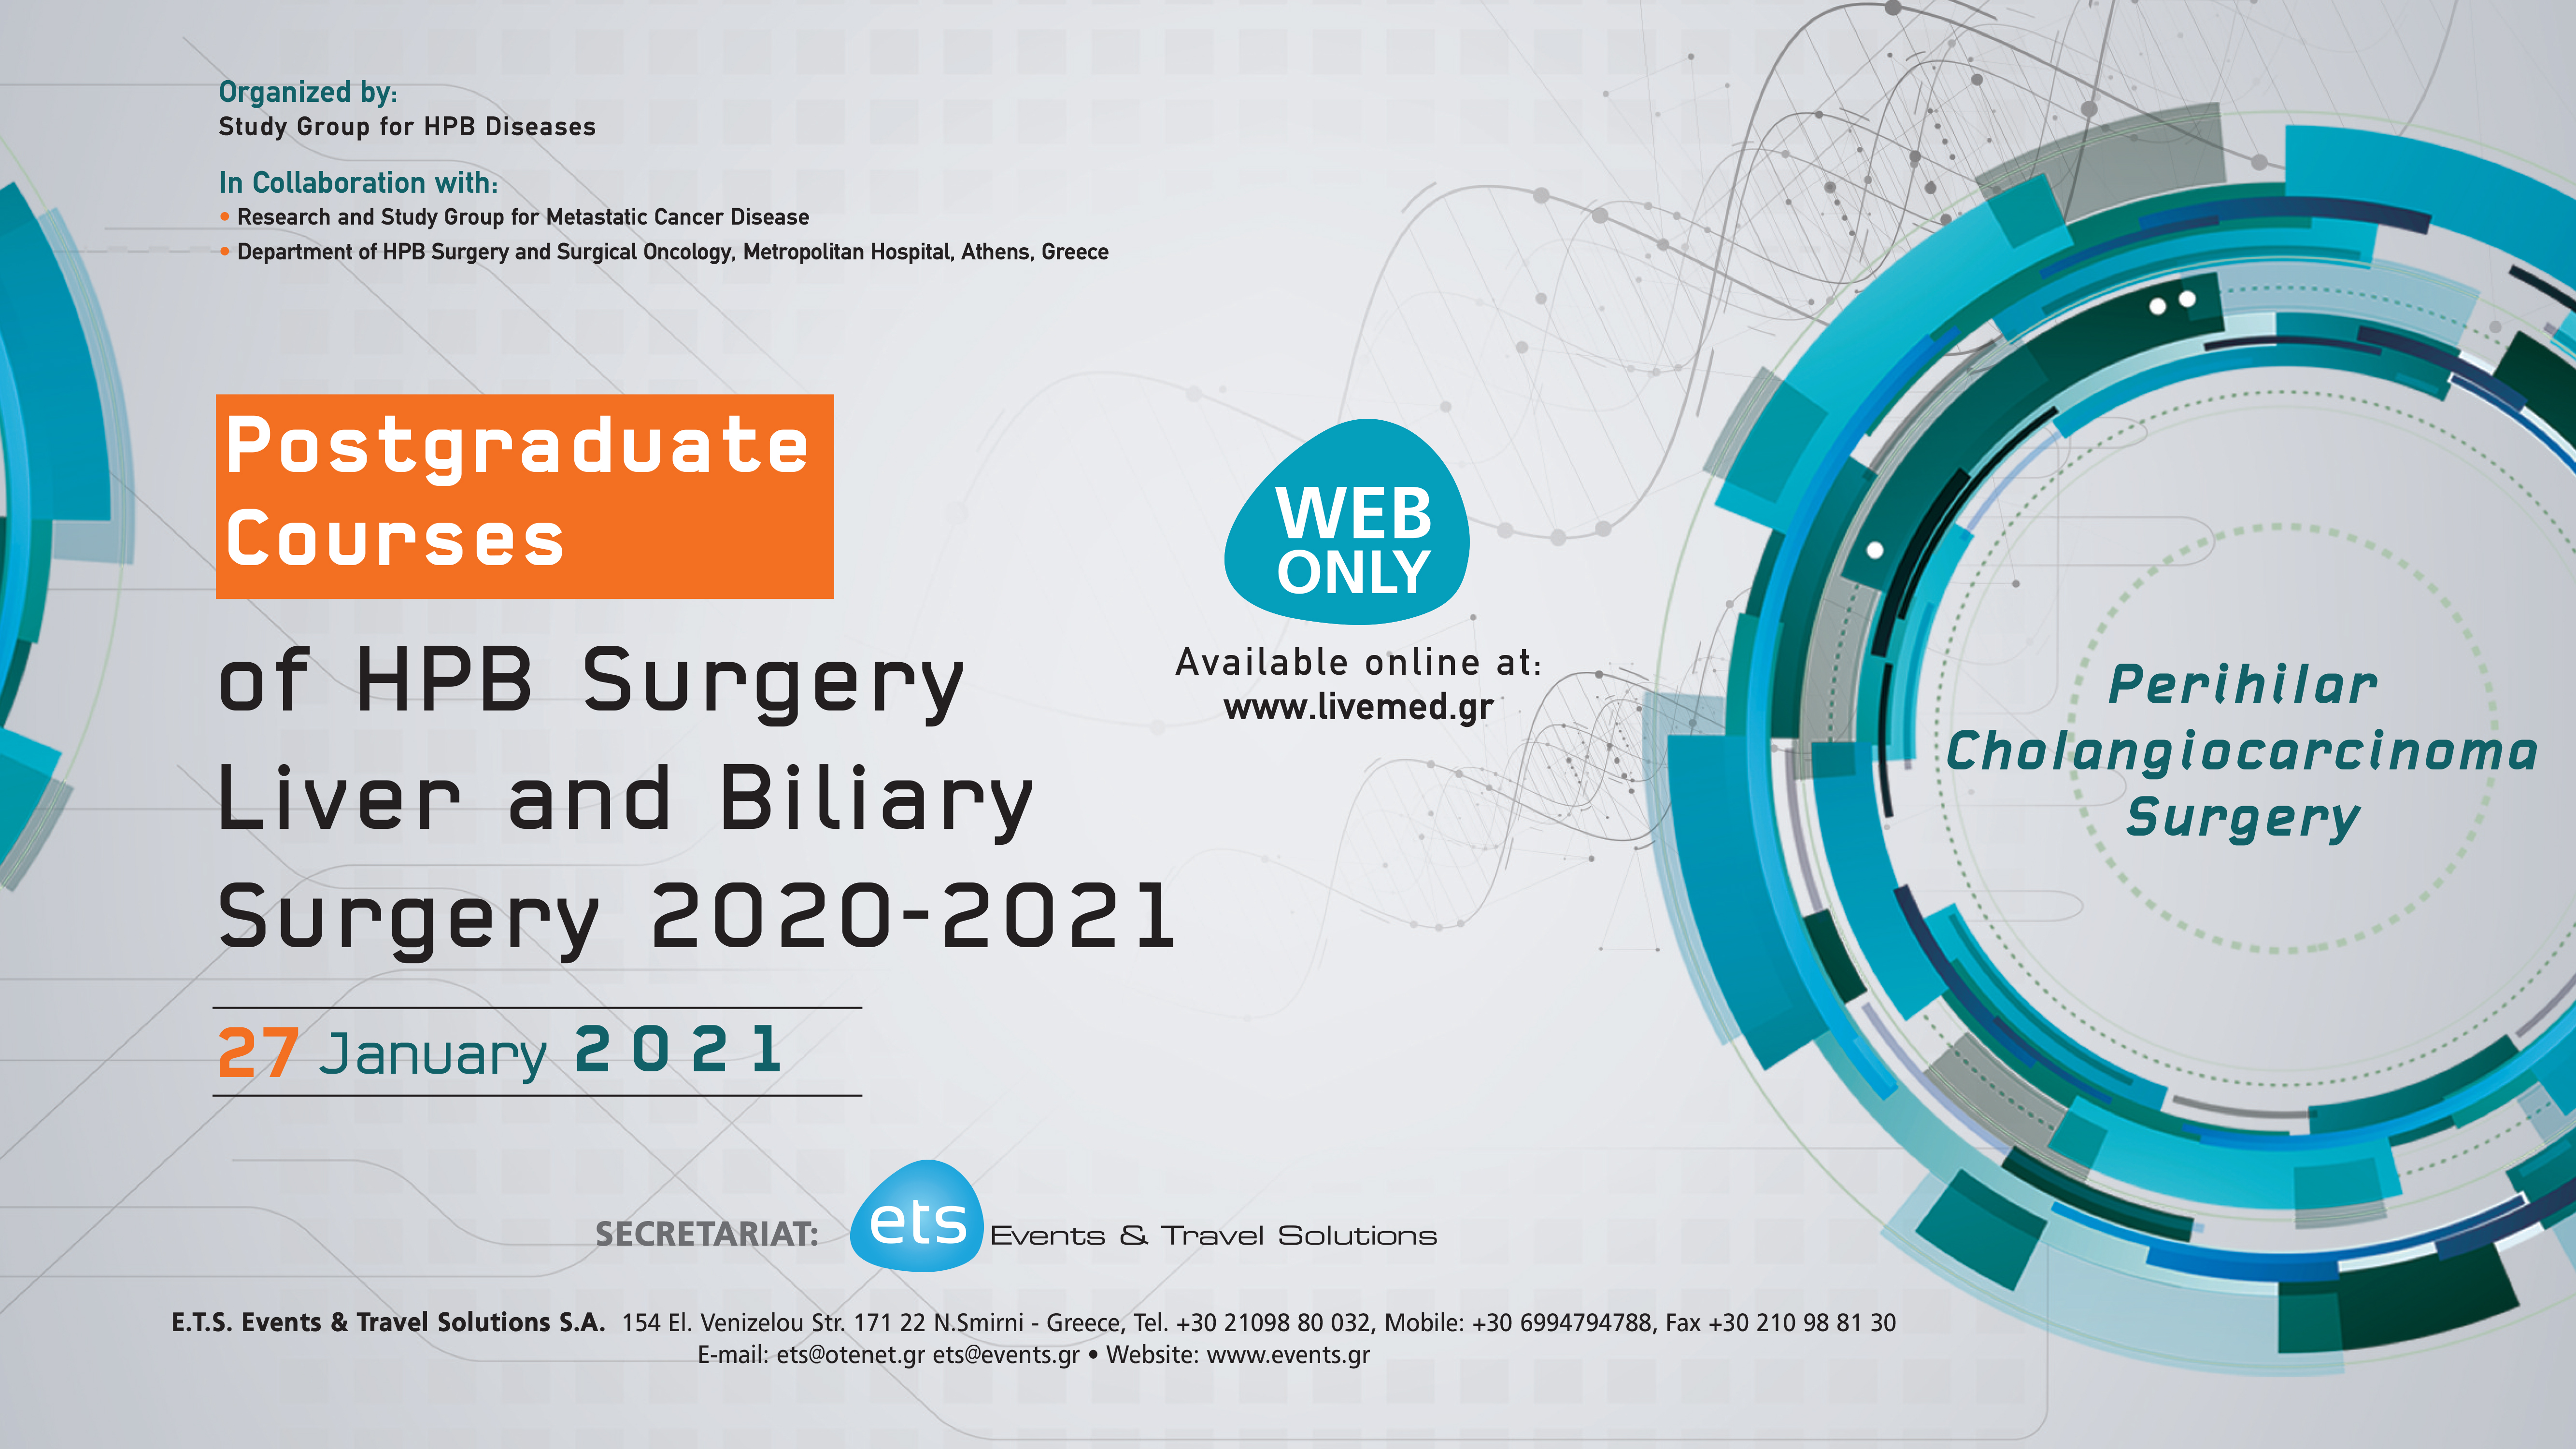 Postgraduate Courses of HPB Surgery Liver and Biliary Surgery 2020-2021 - Perihilar Cholangiocarcinoma Surgery